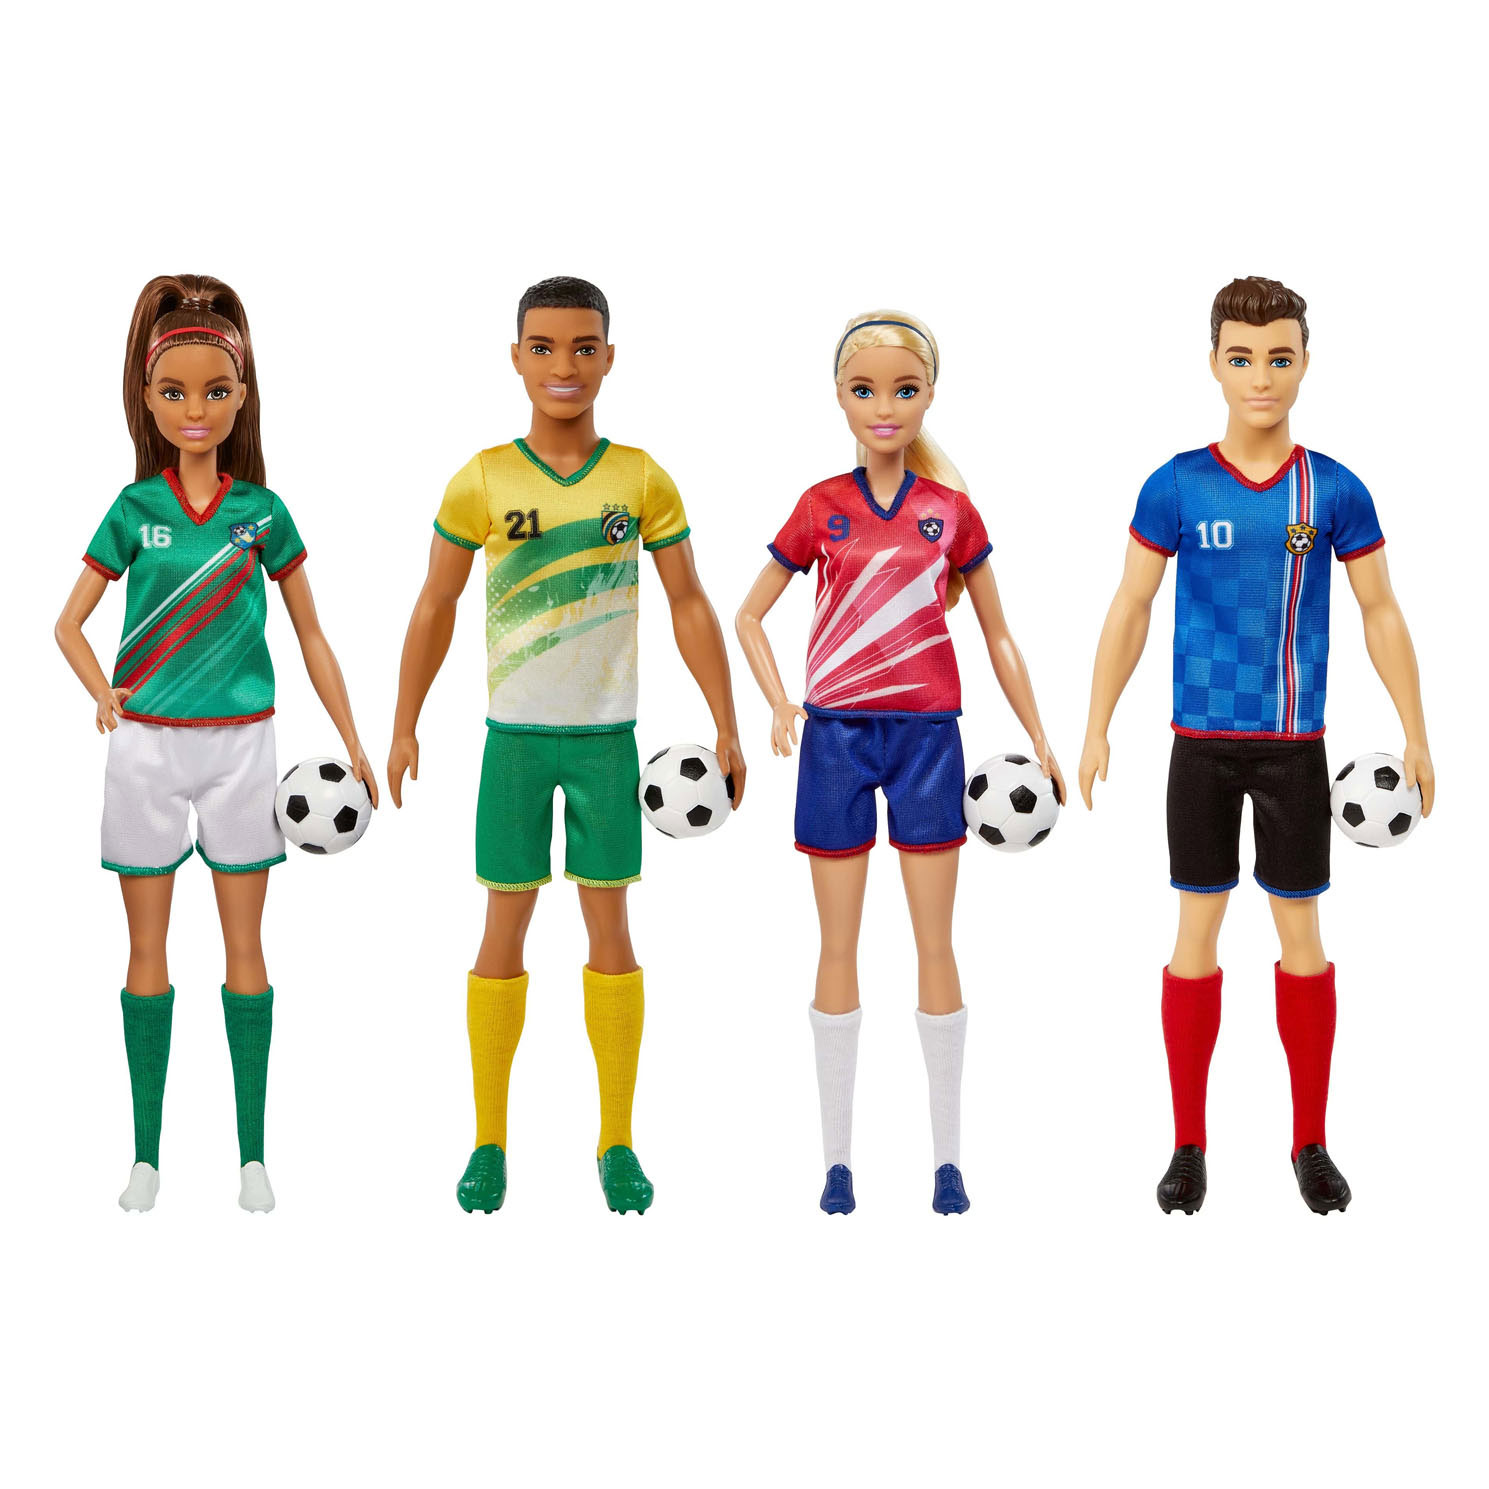 Barbie Pop Voetbalspeelster